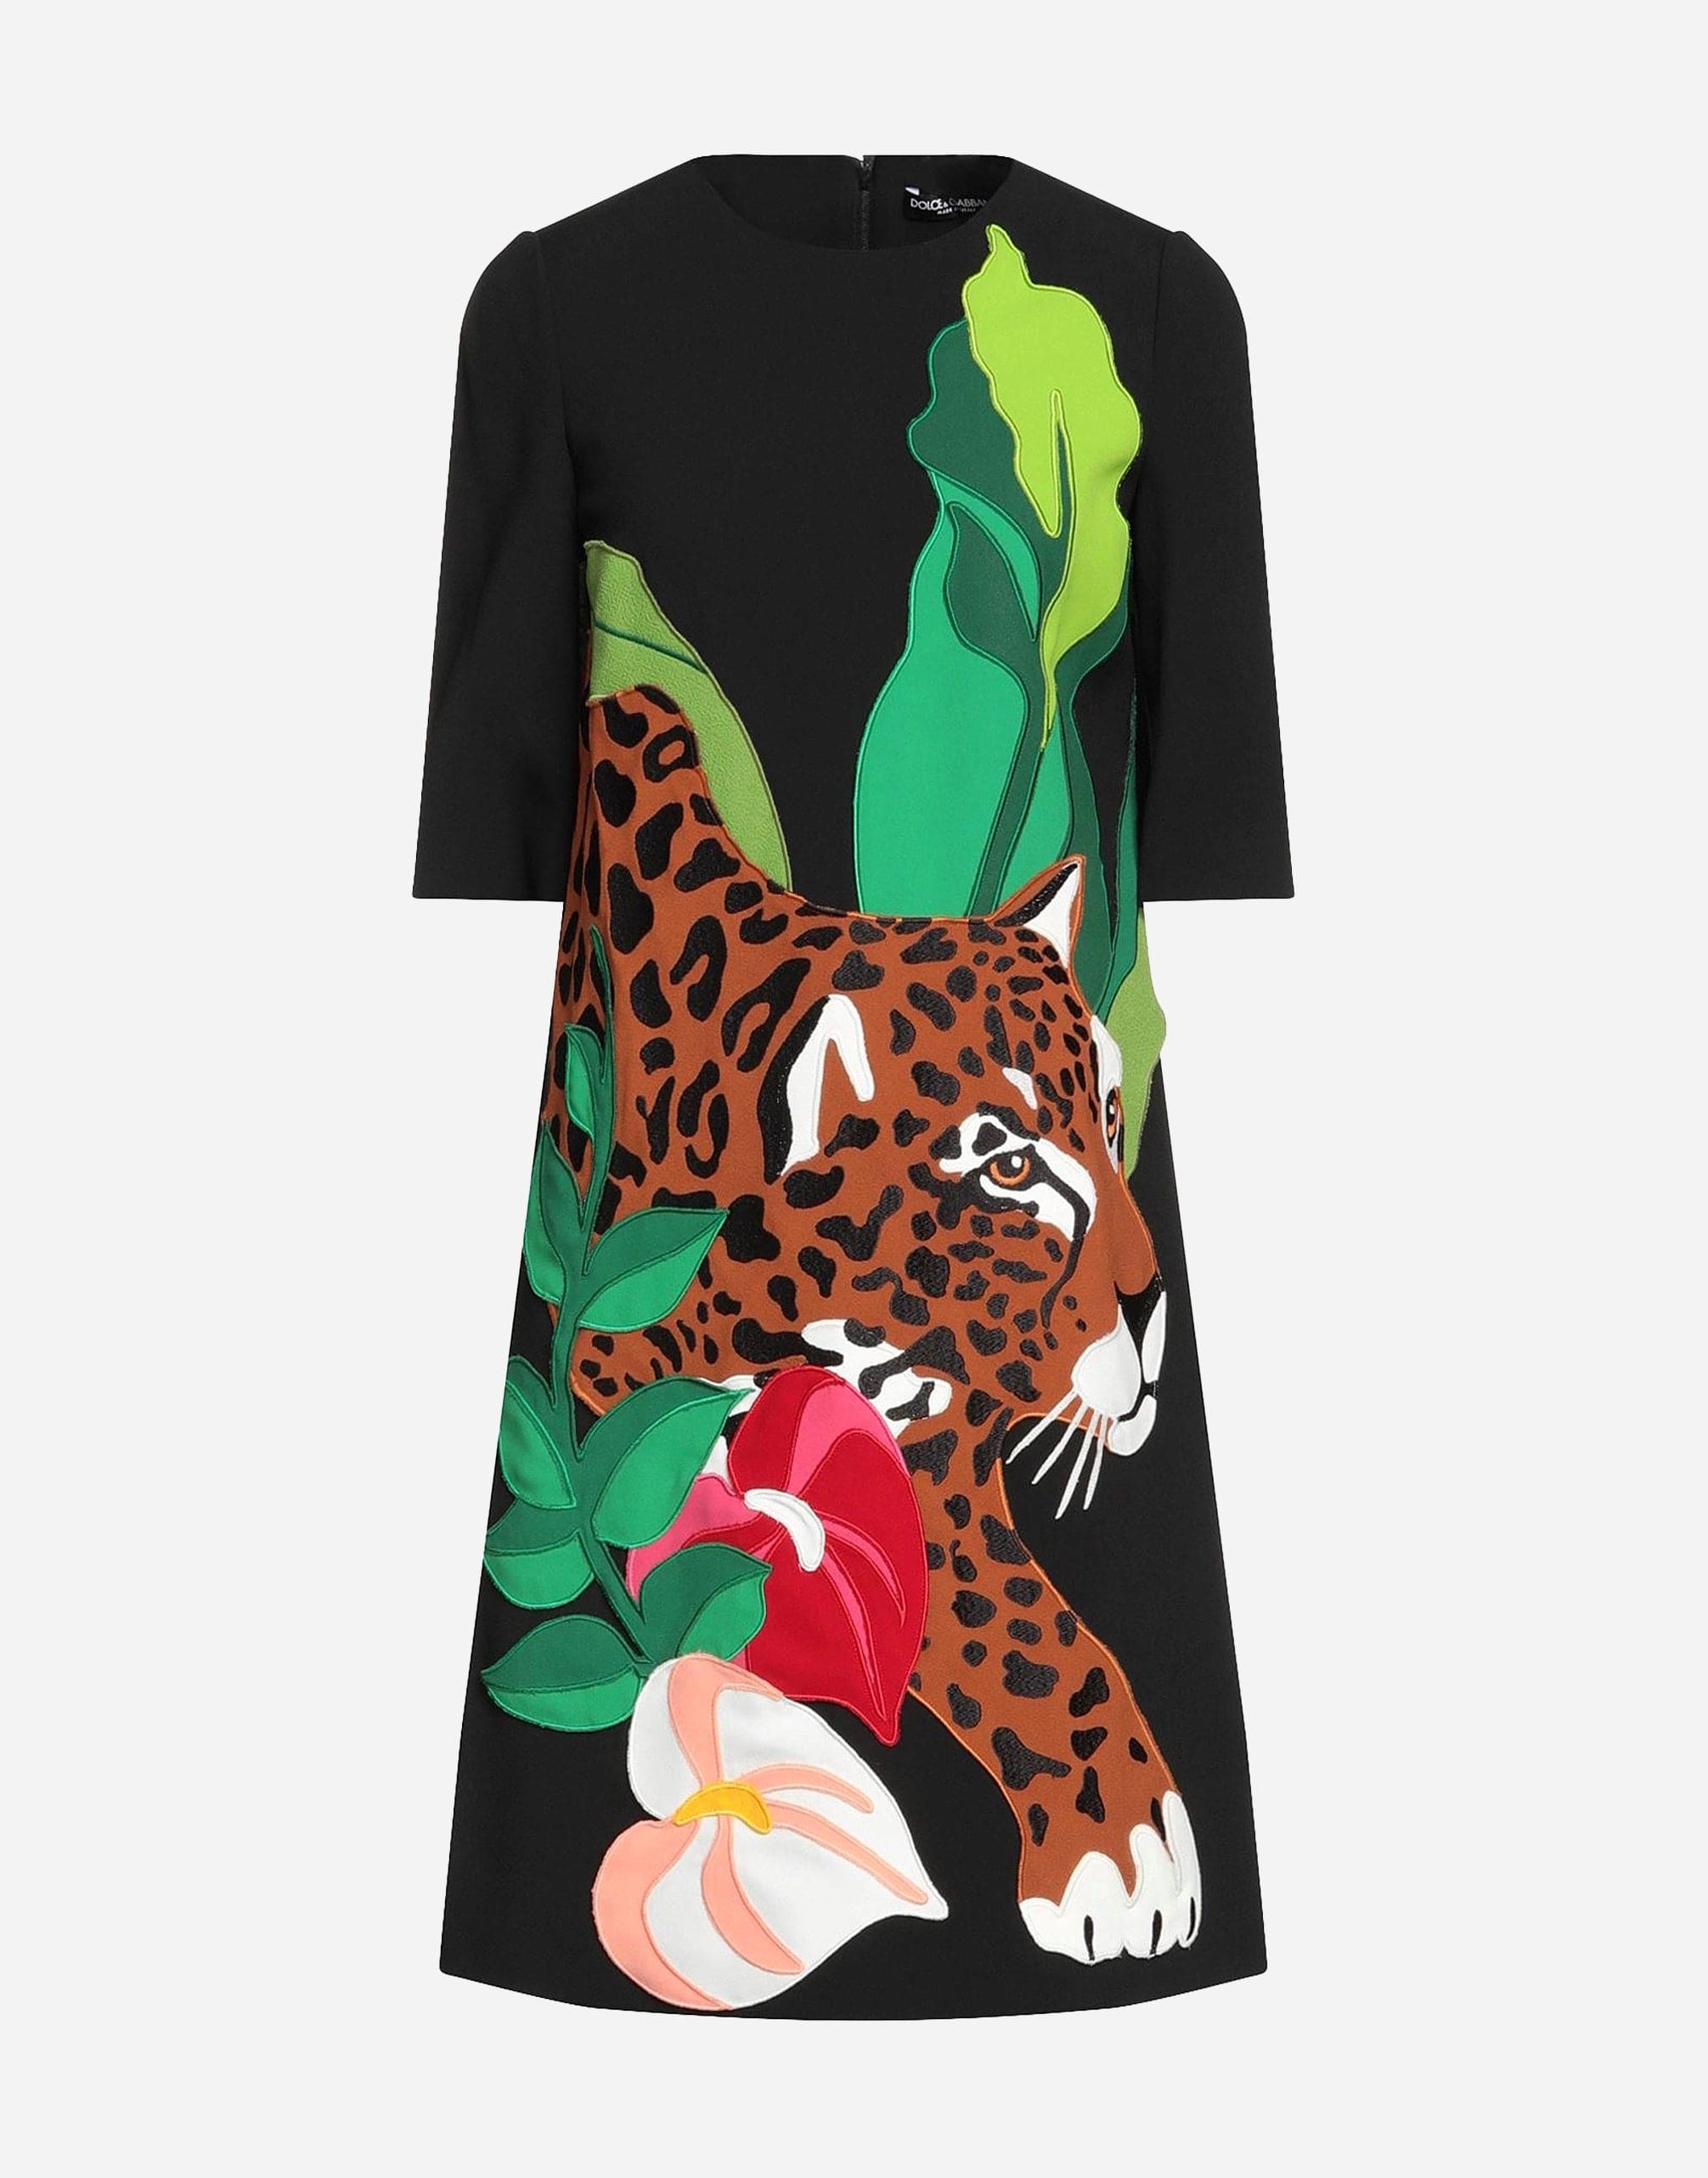 Dolce & Gabbana Black Tiger Jungle Print Sheath Stretch Dress